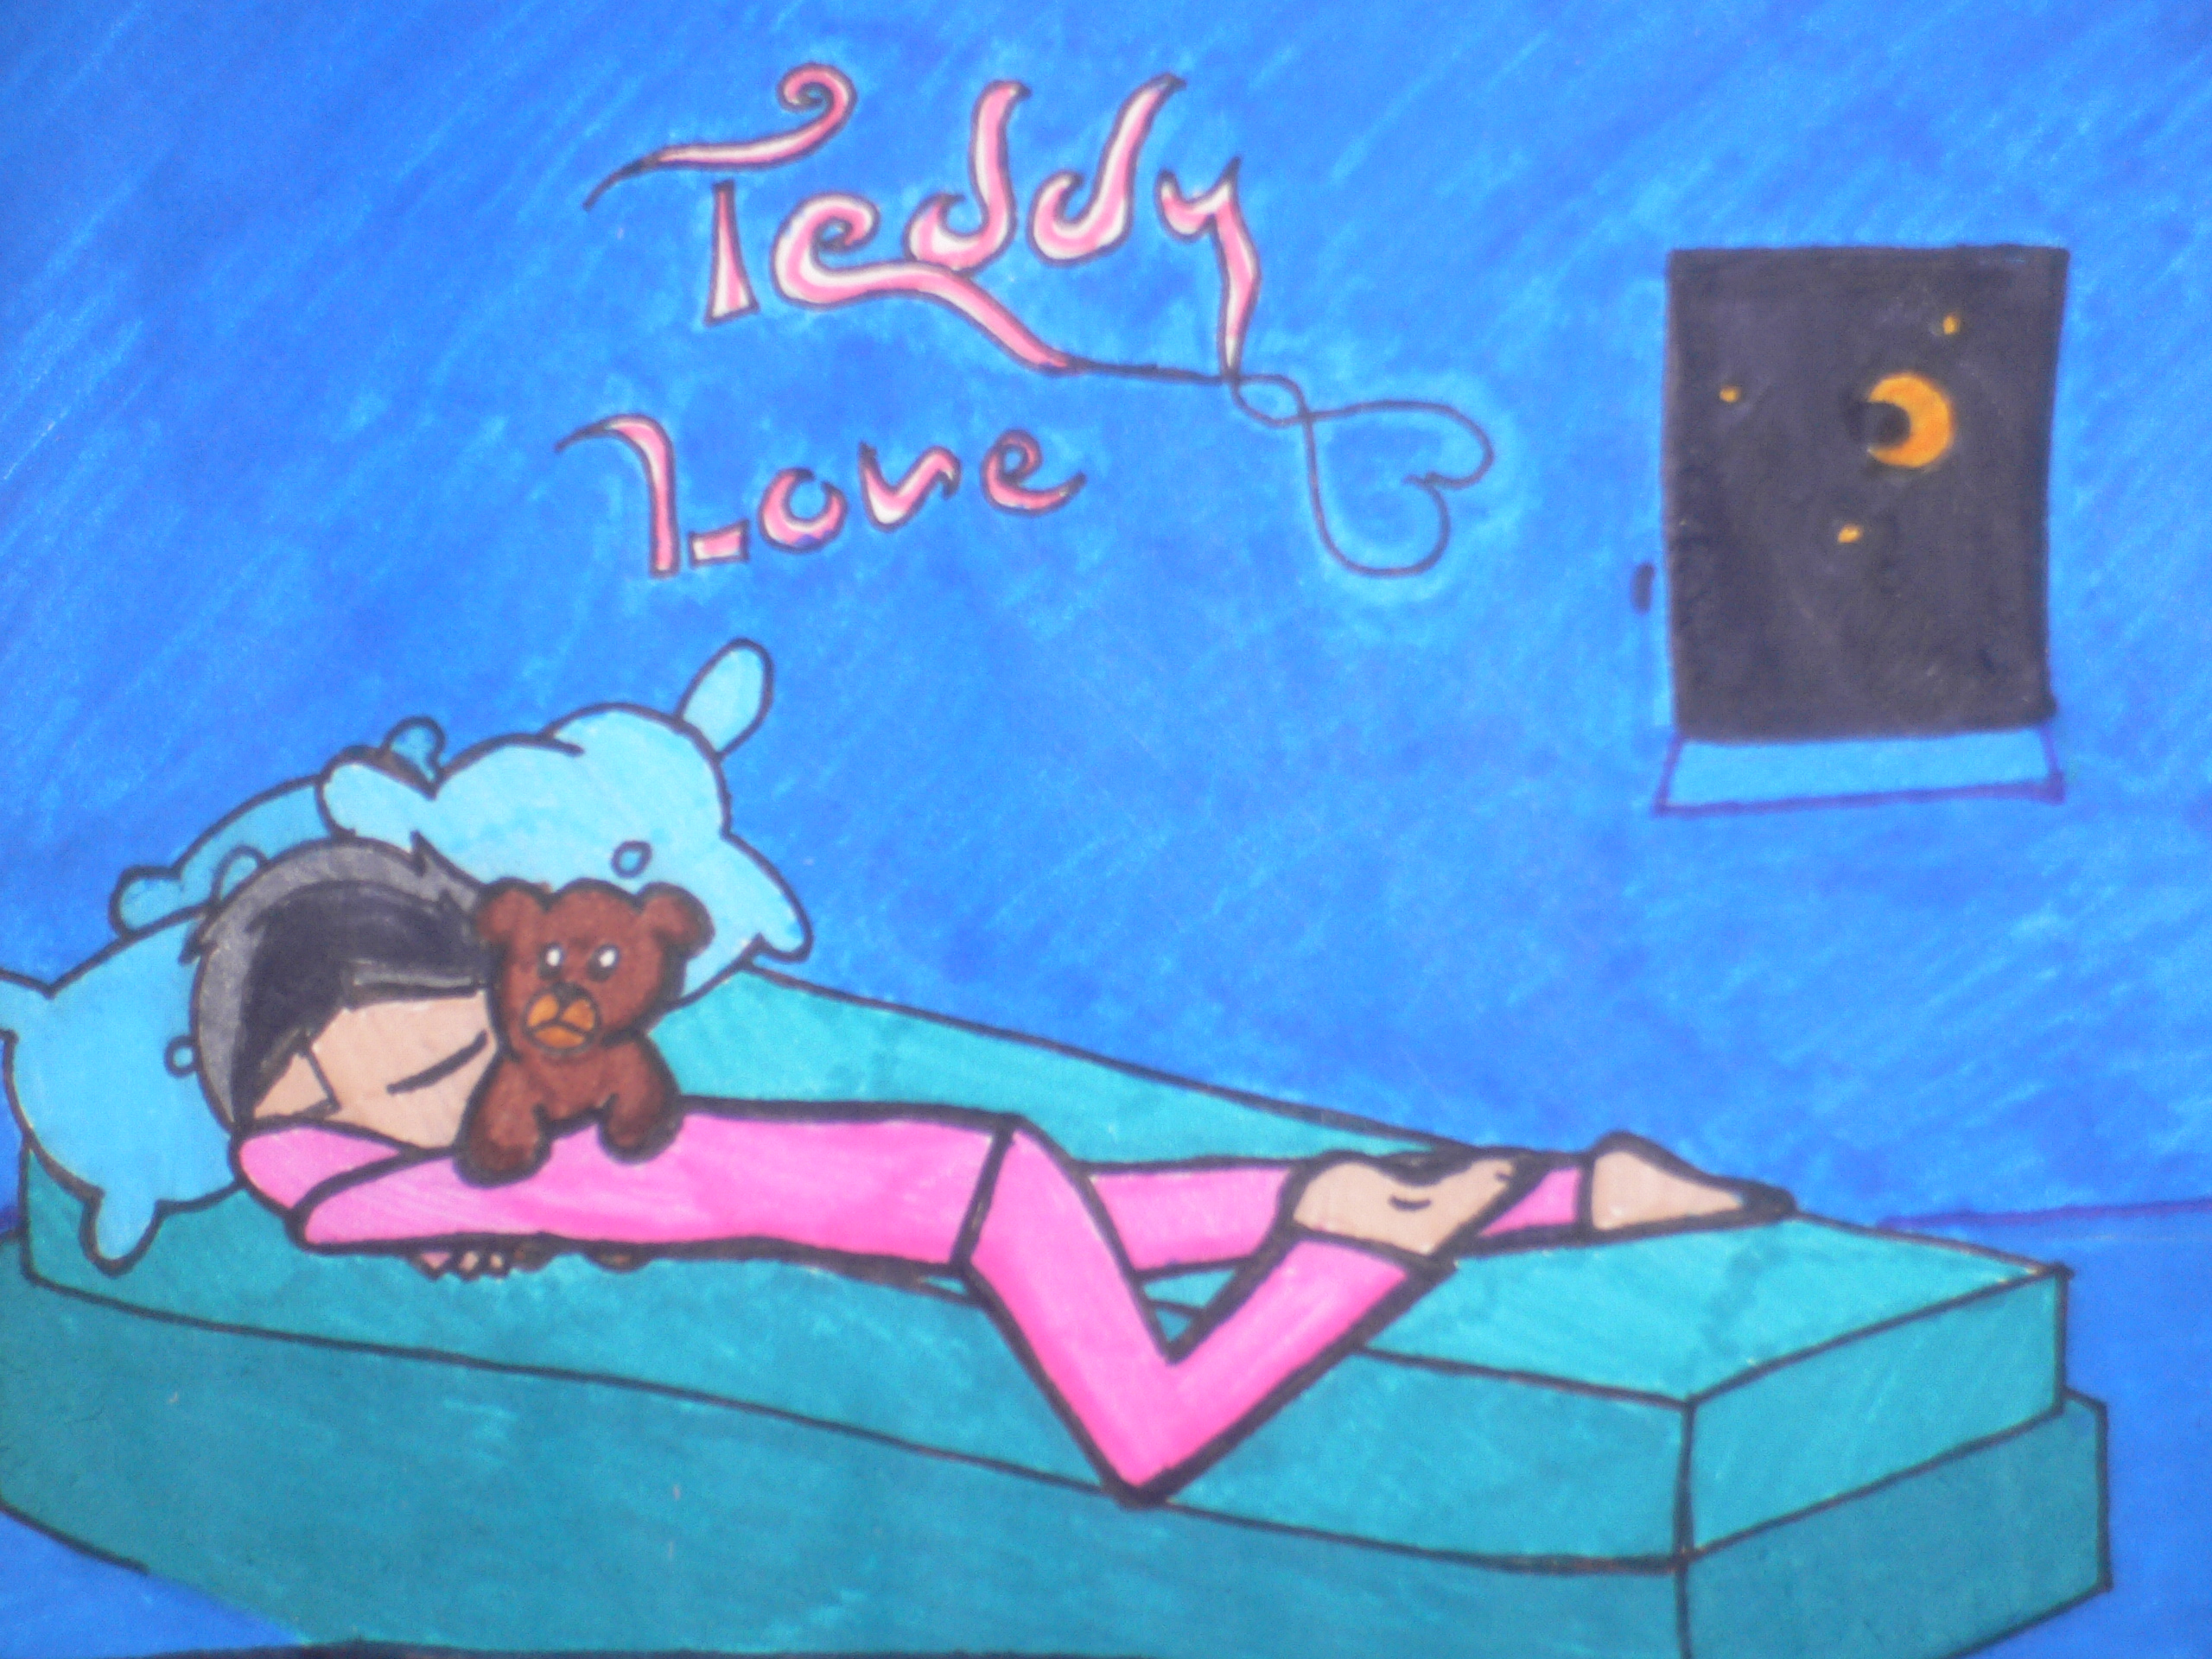 Teddy love by DaniPhantom92